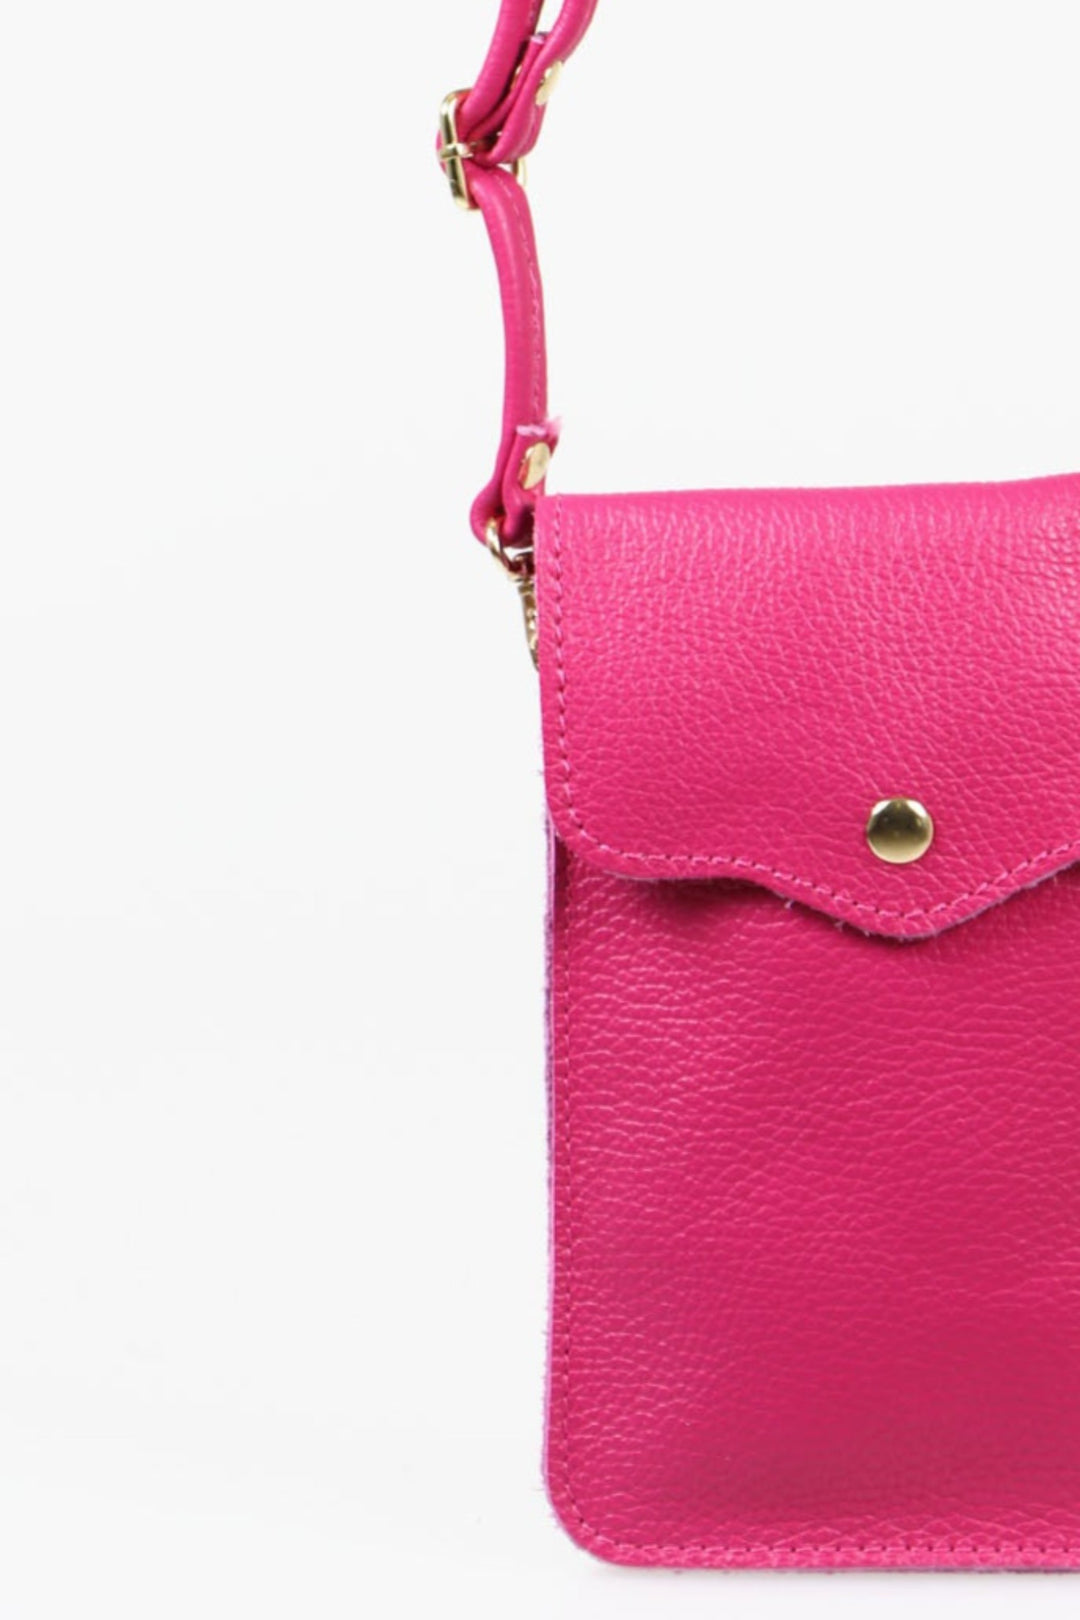 Raspberry Scallop Detail Genuine Italian Leather Crossbody Phone Bag